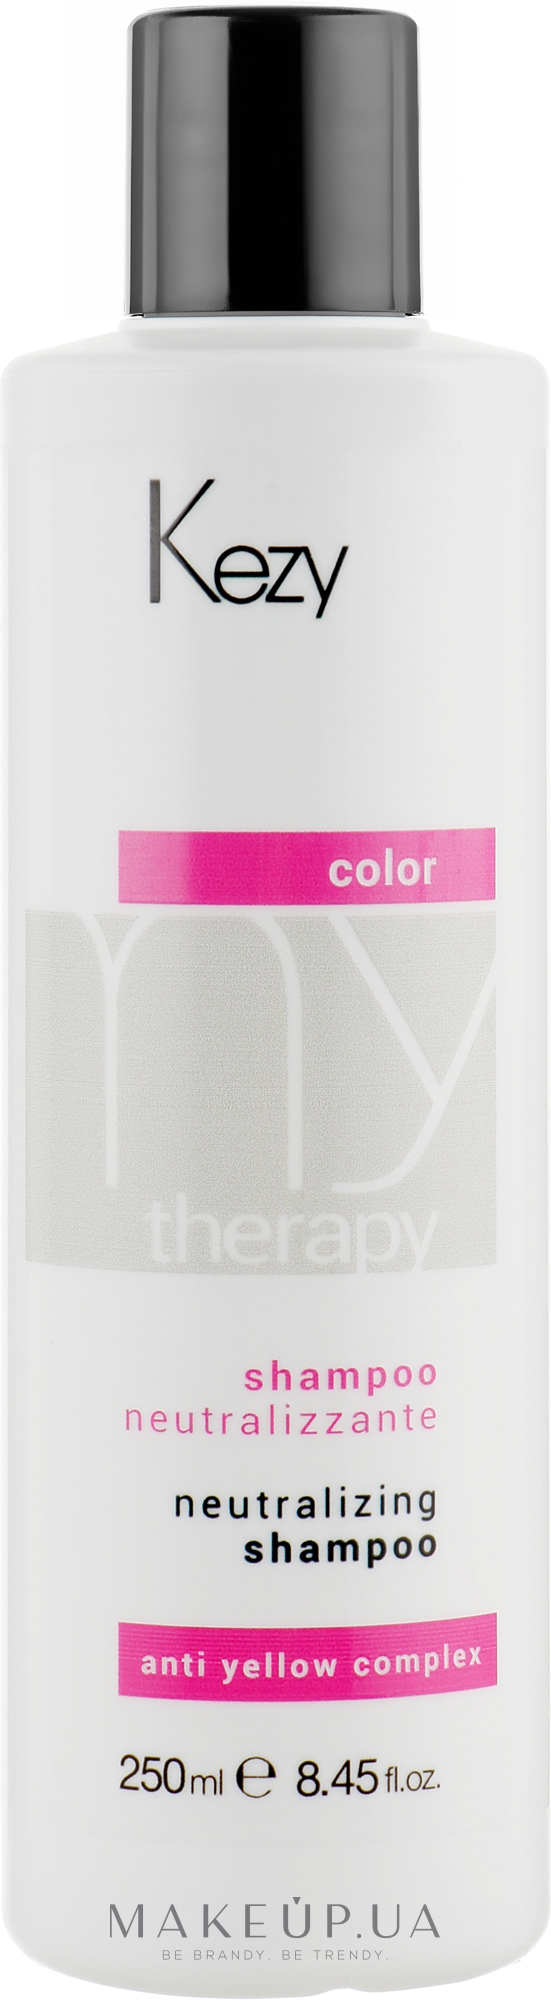 Шампунь для волос нейтрализирующий желтизну - Kezy MyTherapy Post Color Neutralizing Shampoo — фото 250ml